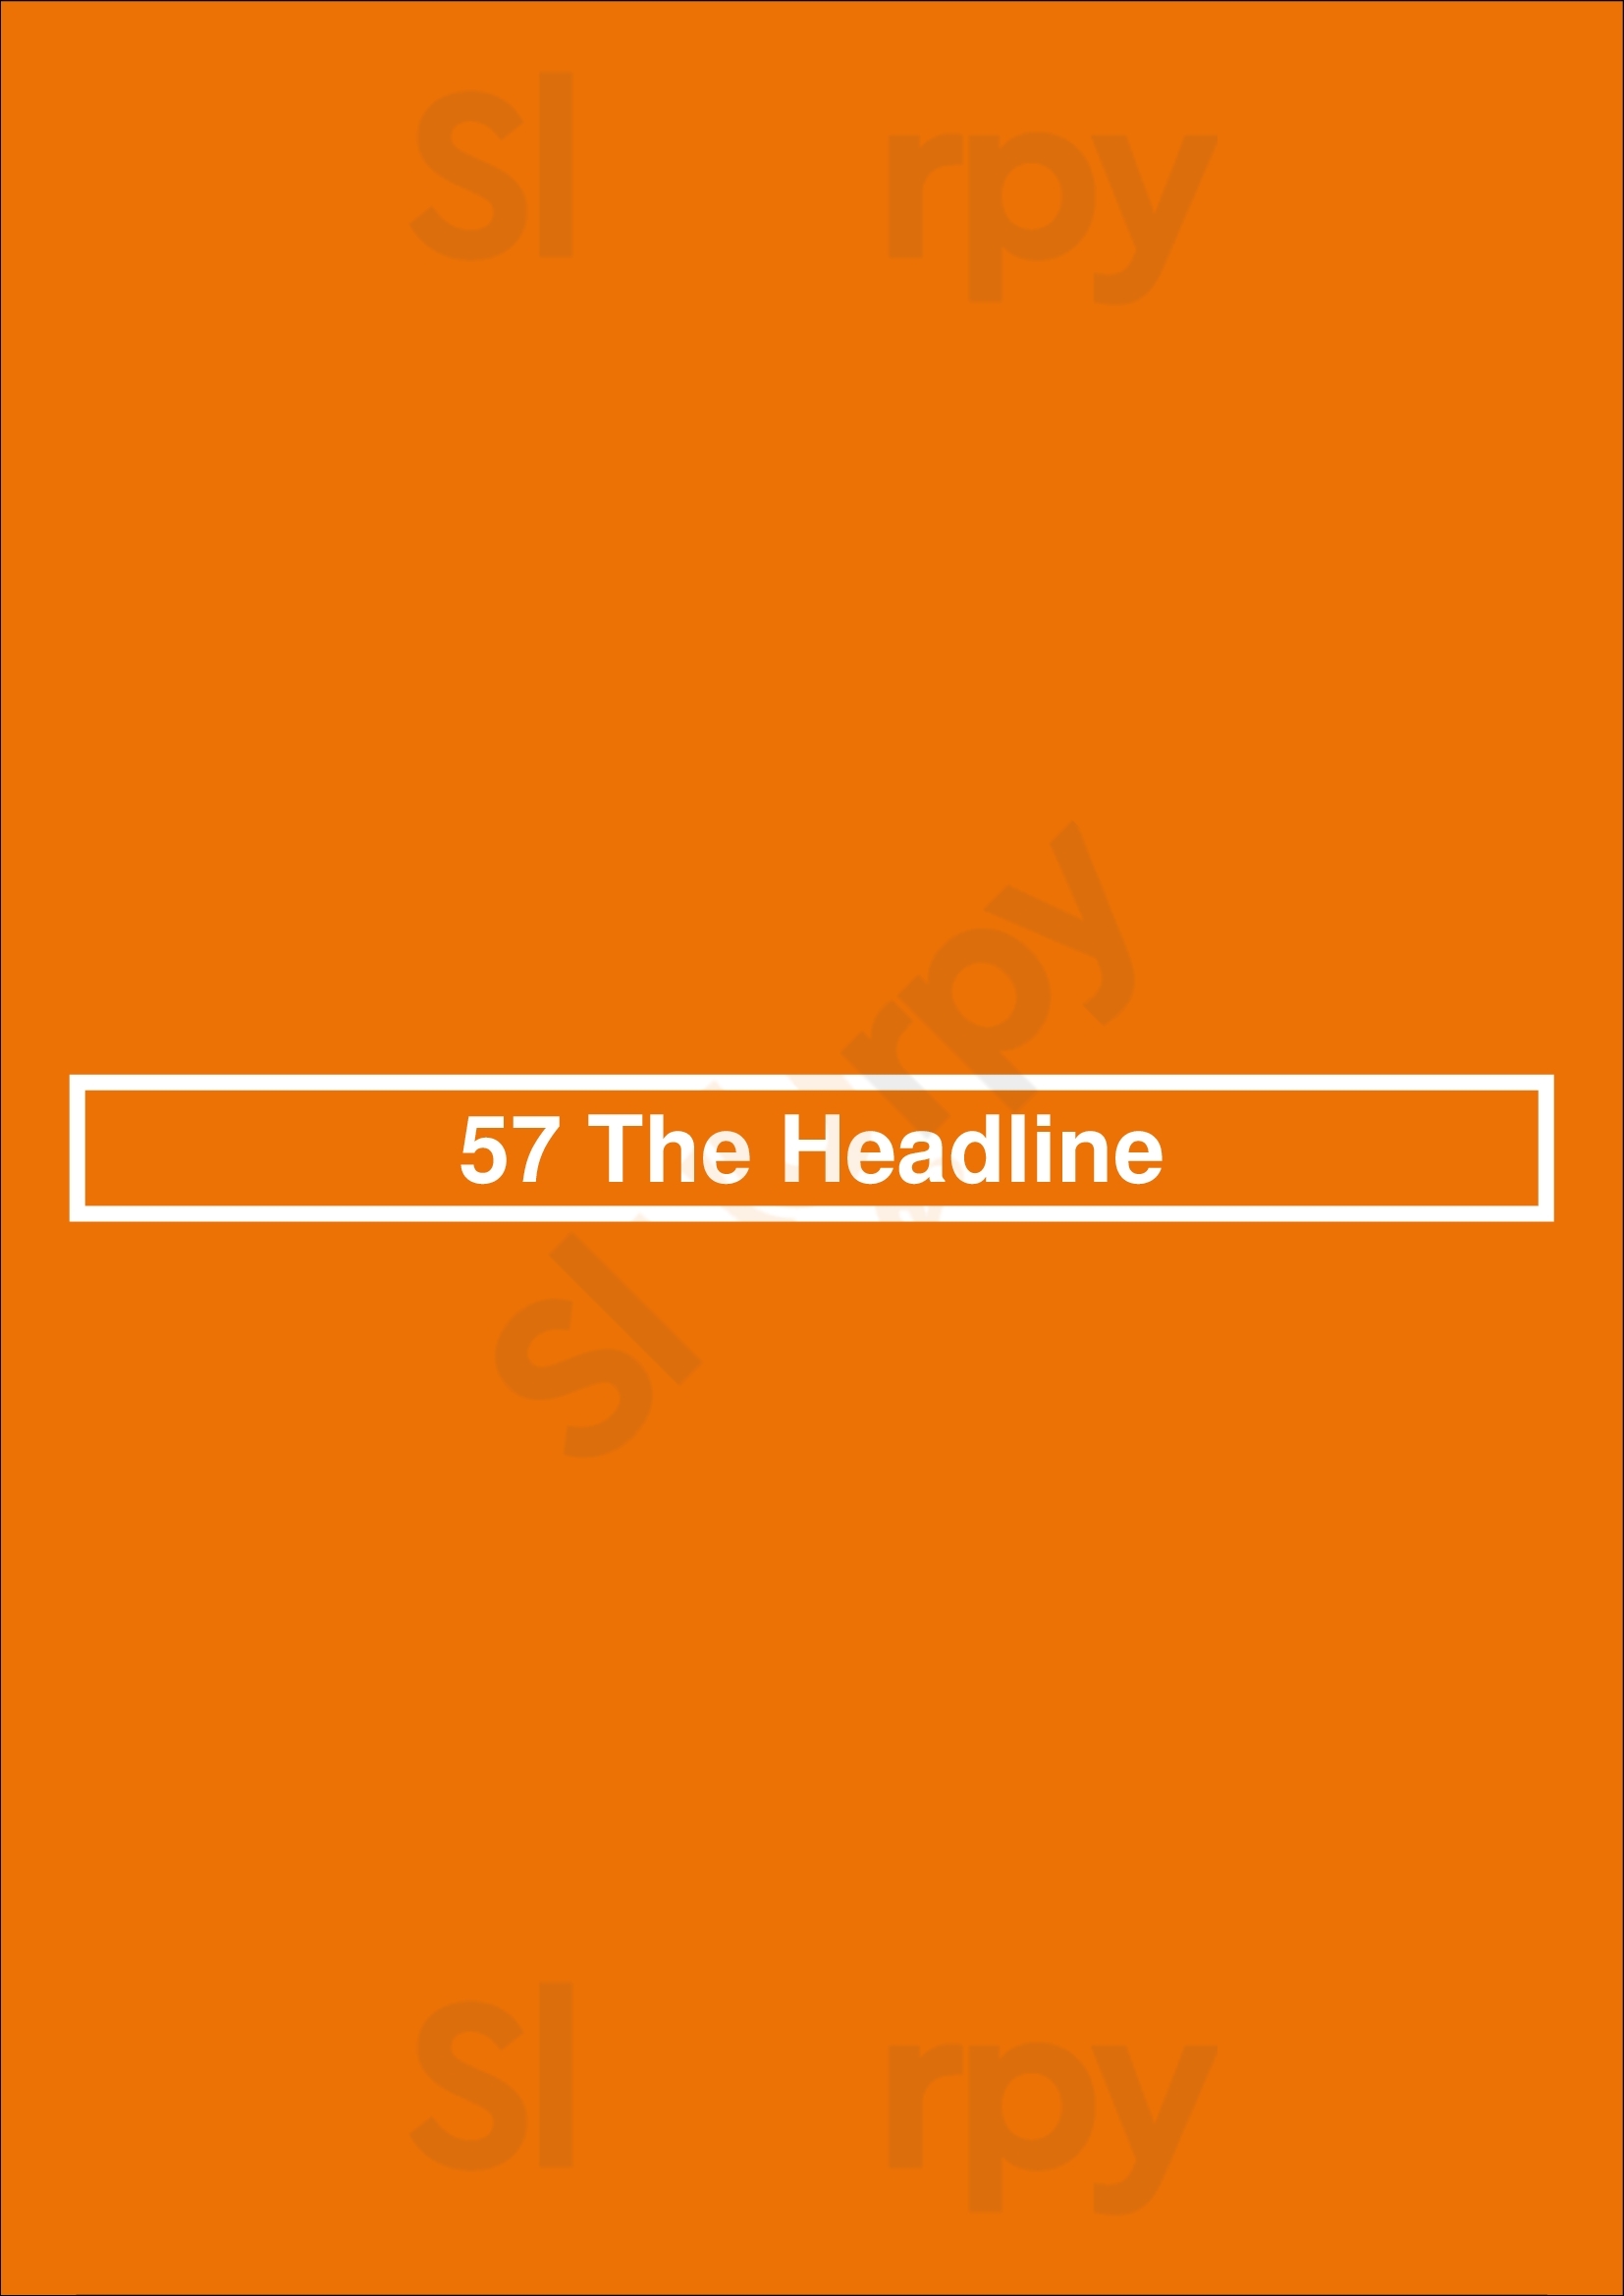 57 The Headline Dublin Menu - 1